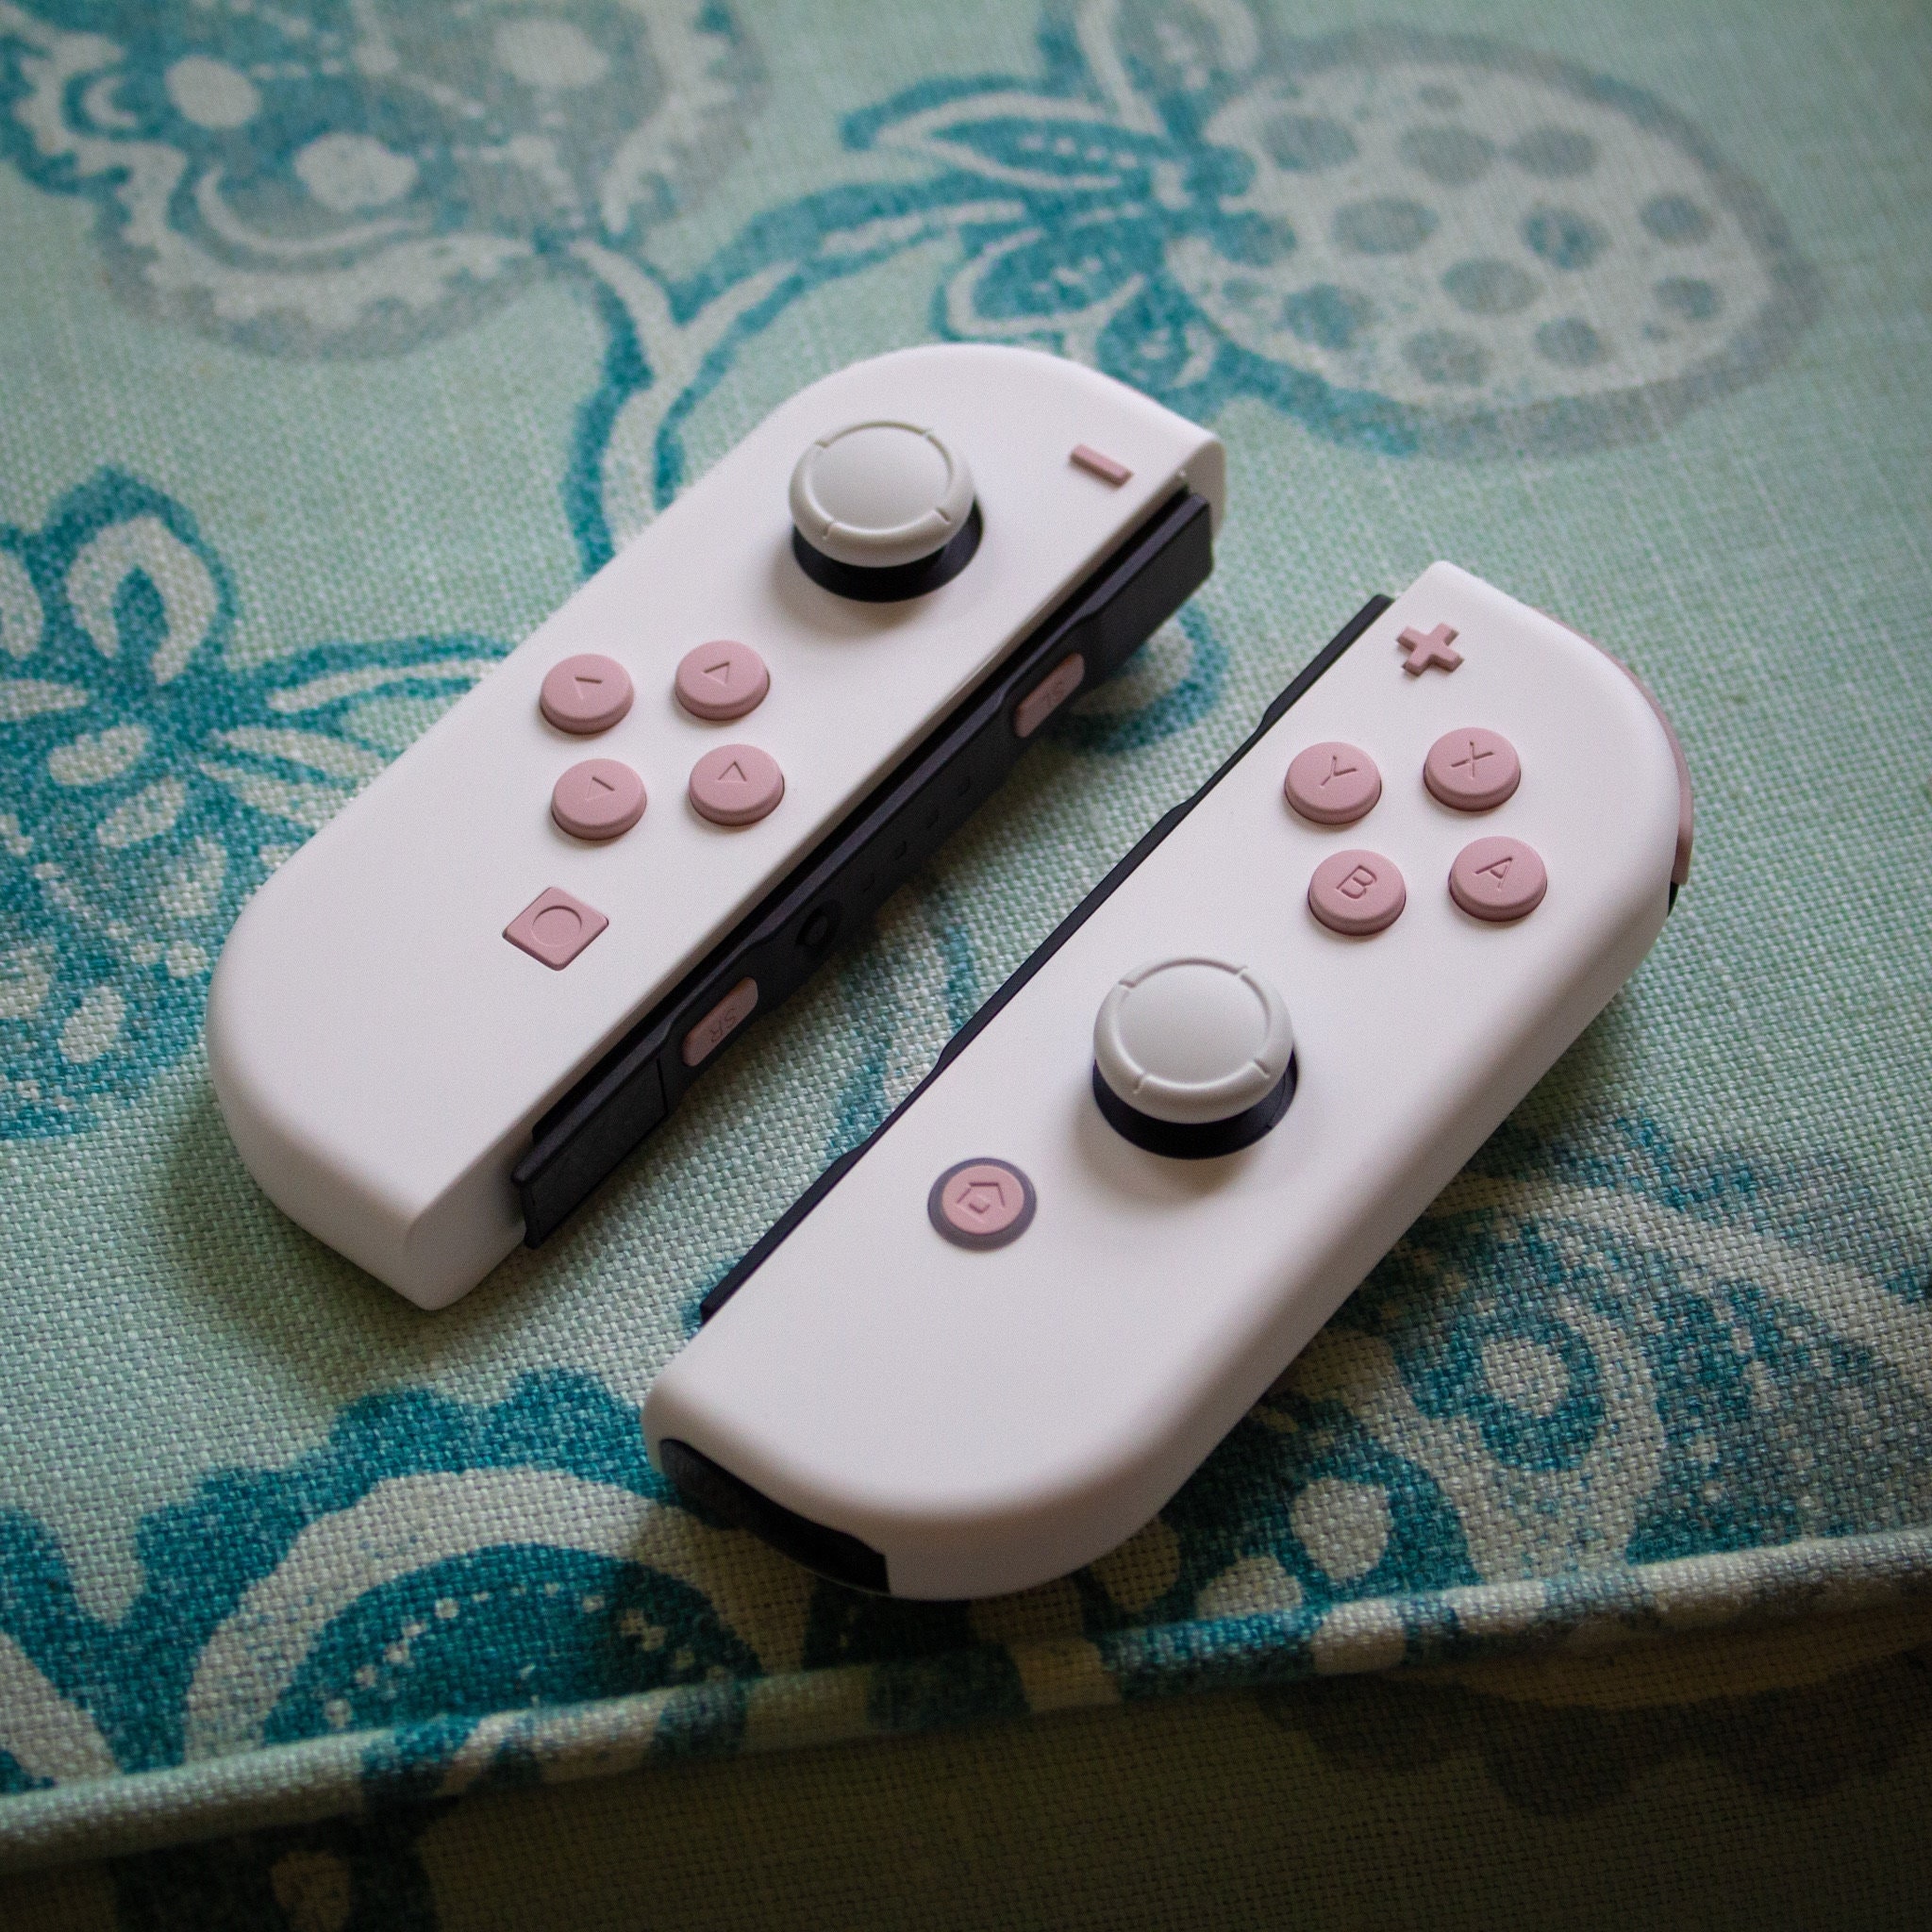 Custom Joycons Nintendo Switch Joy-con Controller White - Etsy